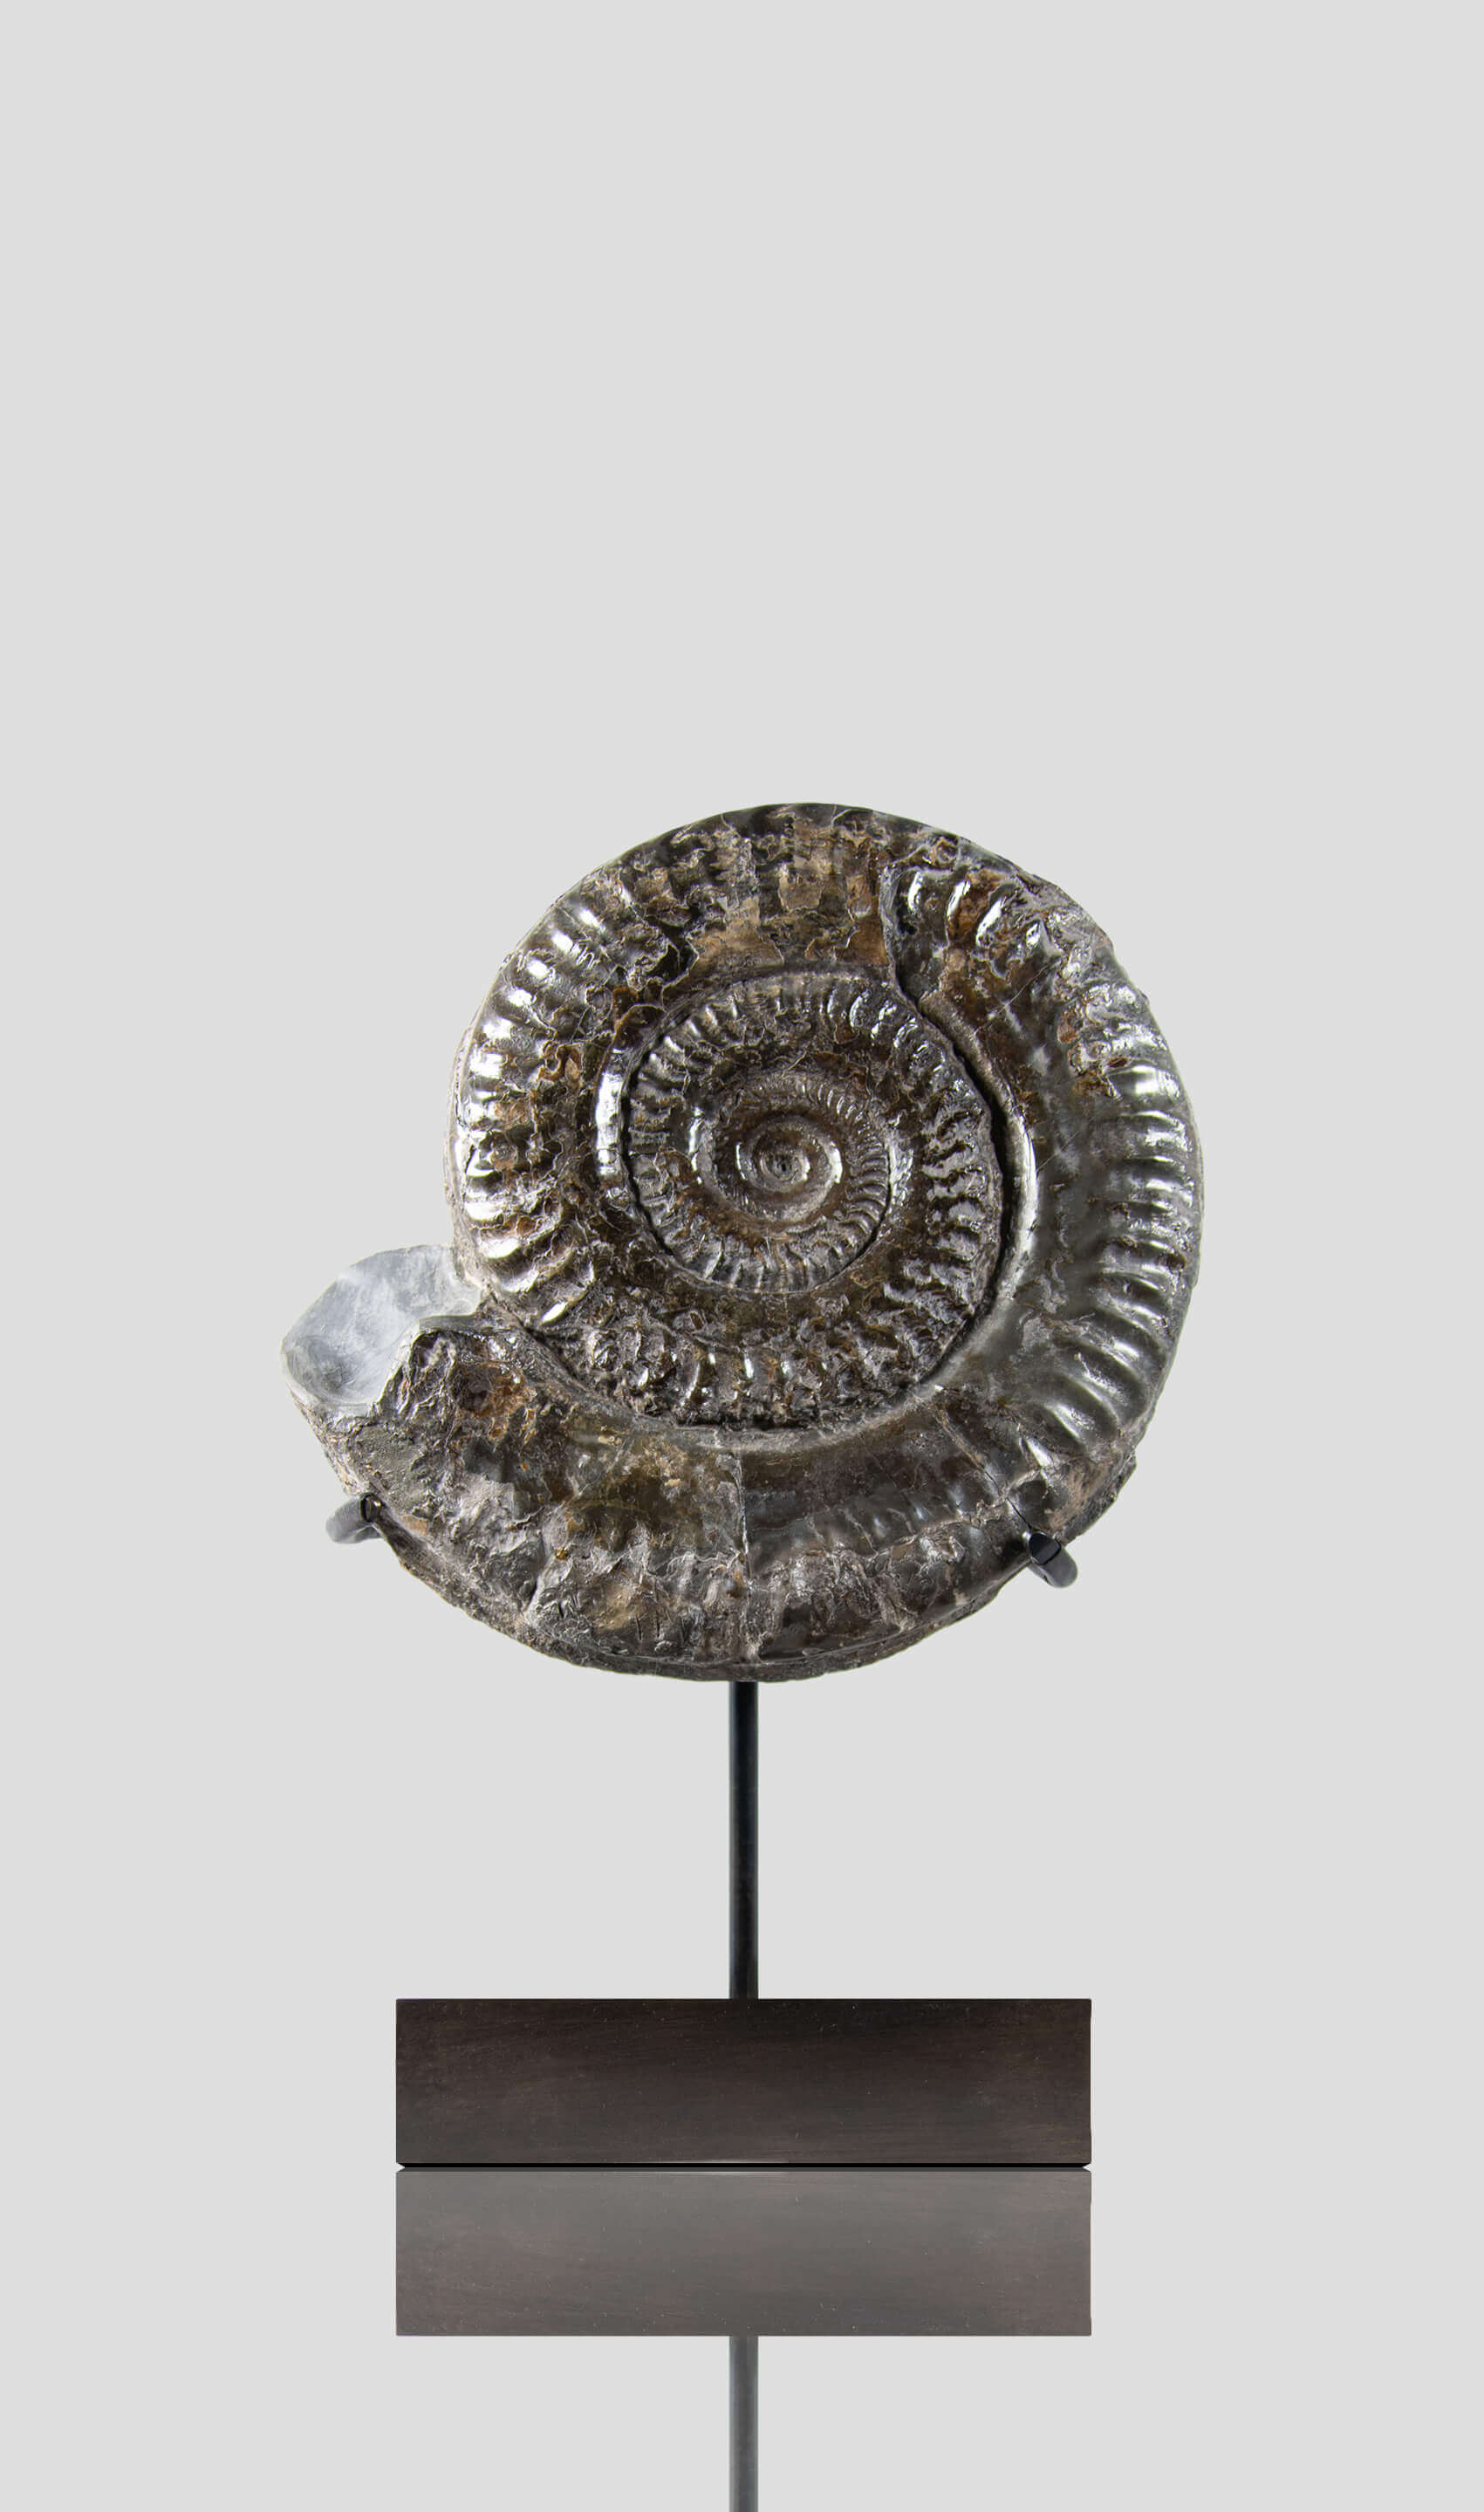 A rare British museum fossil Hildoceras ammonite for sale on bronze stand 32